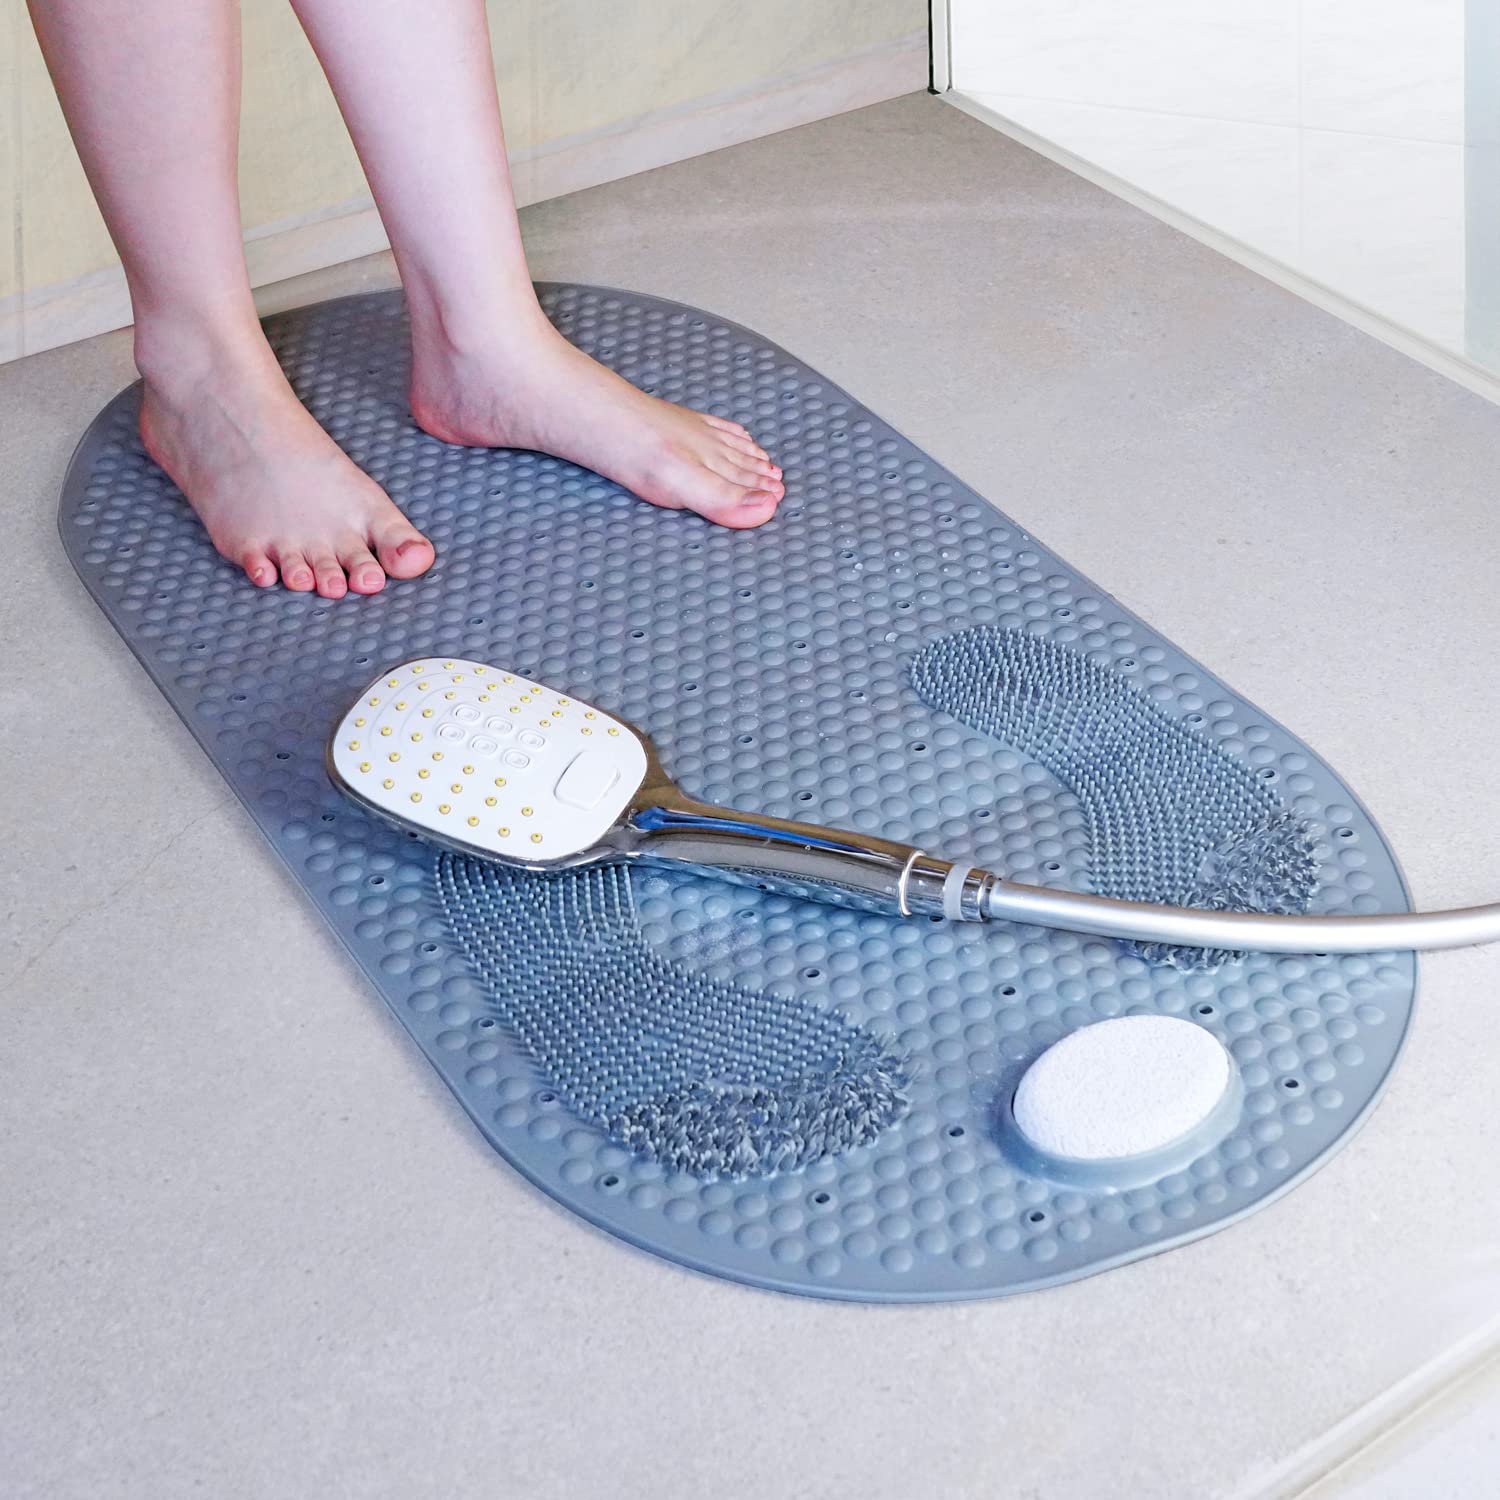 Anti Slip Bathroom Shower Mat